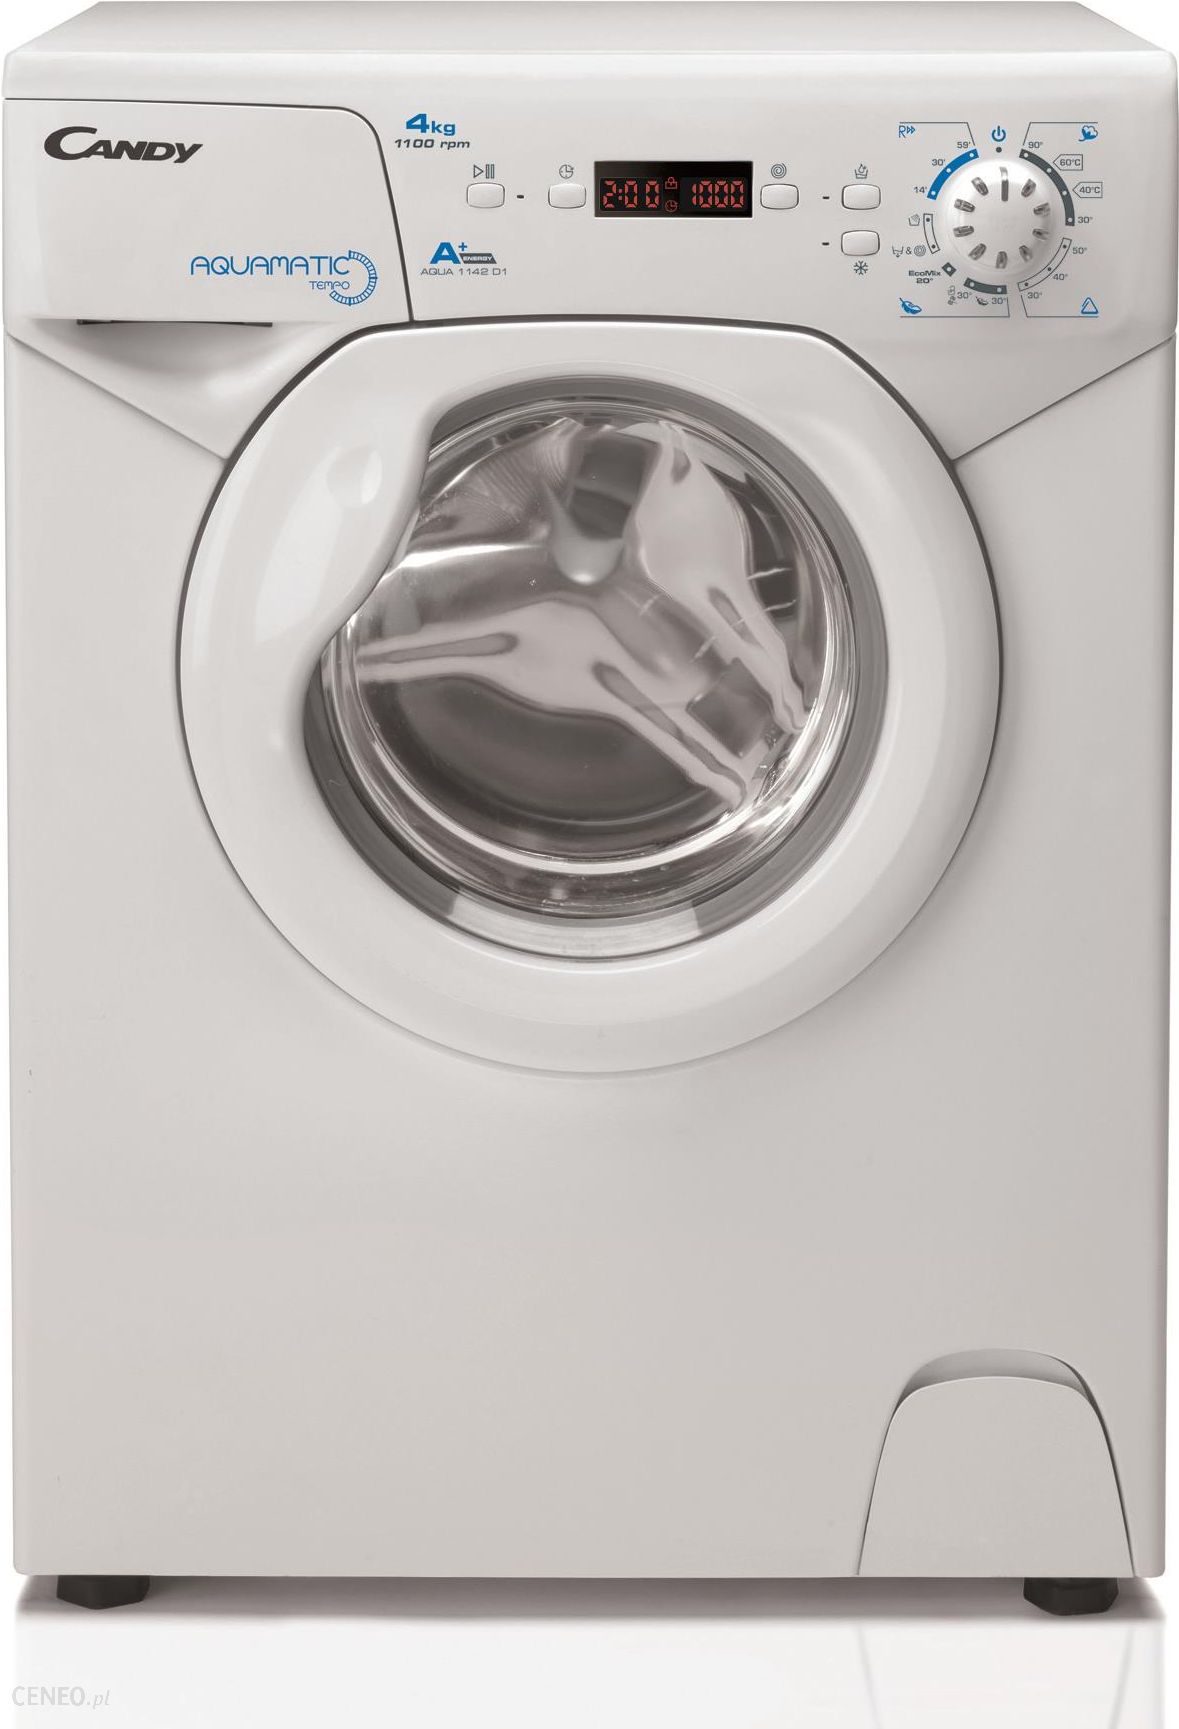   „Candy Aquamatic AQUA 1142D1 / 2-S“ skalbimo mašina